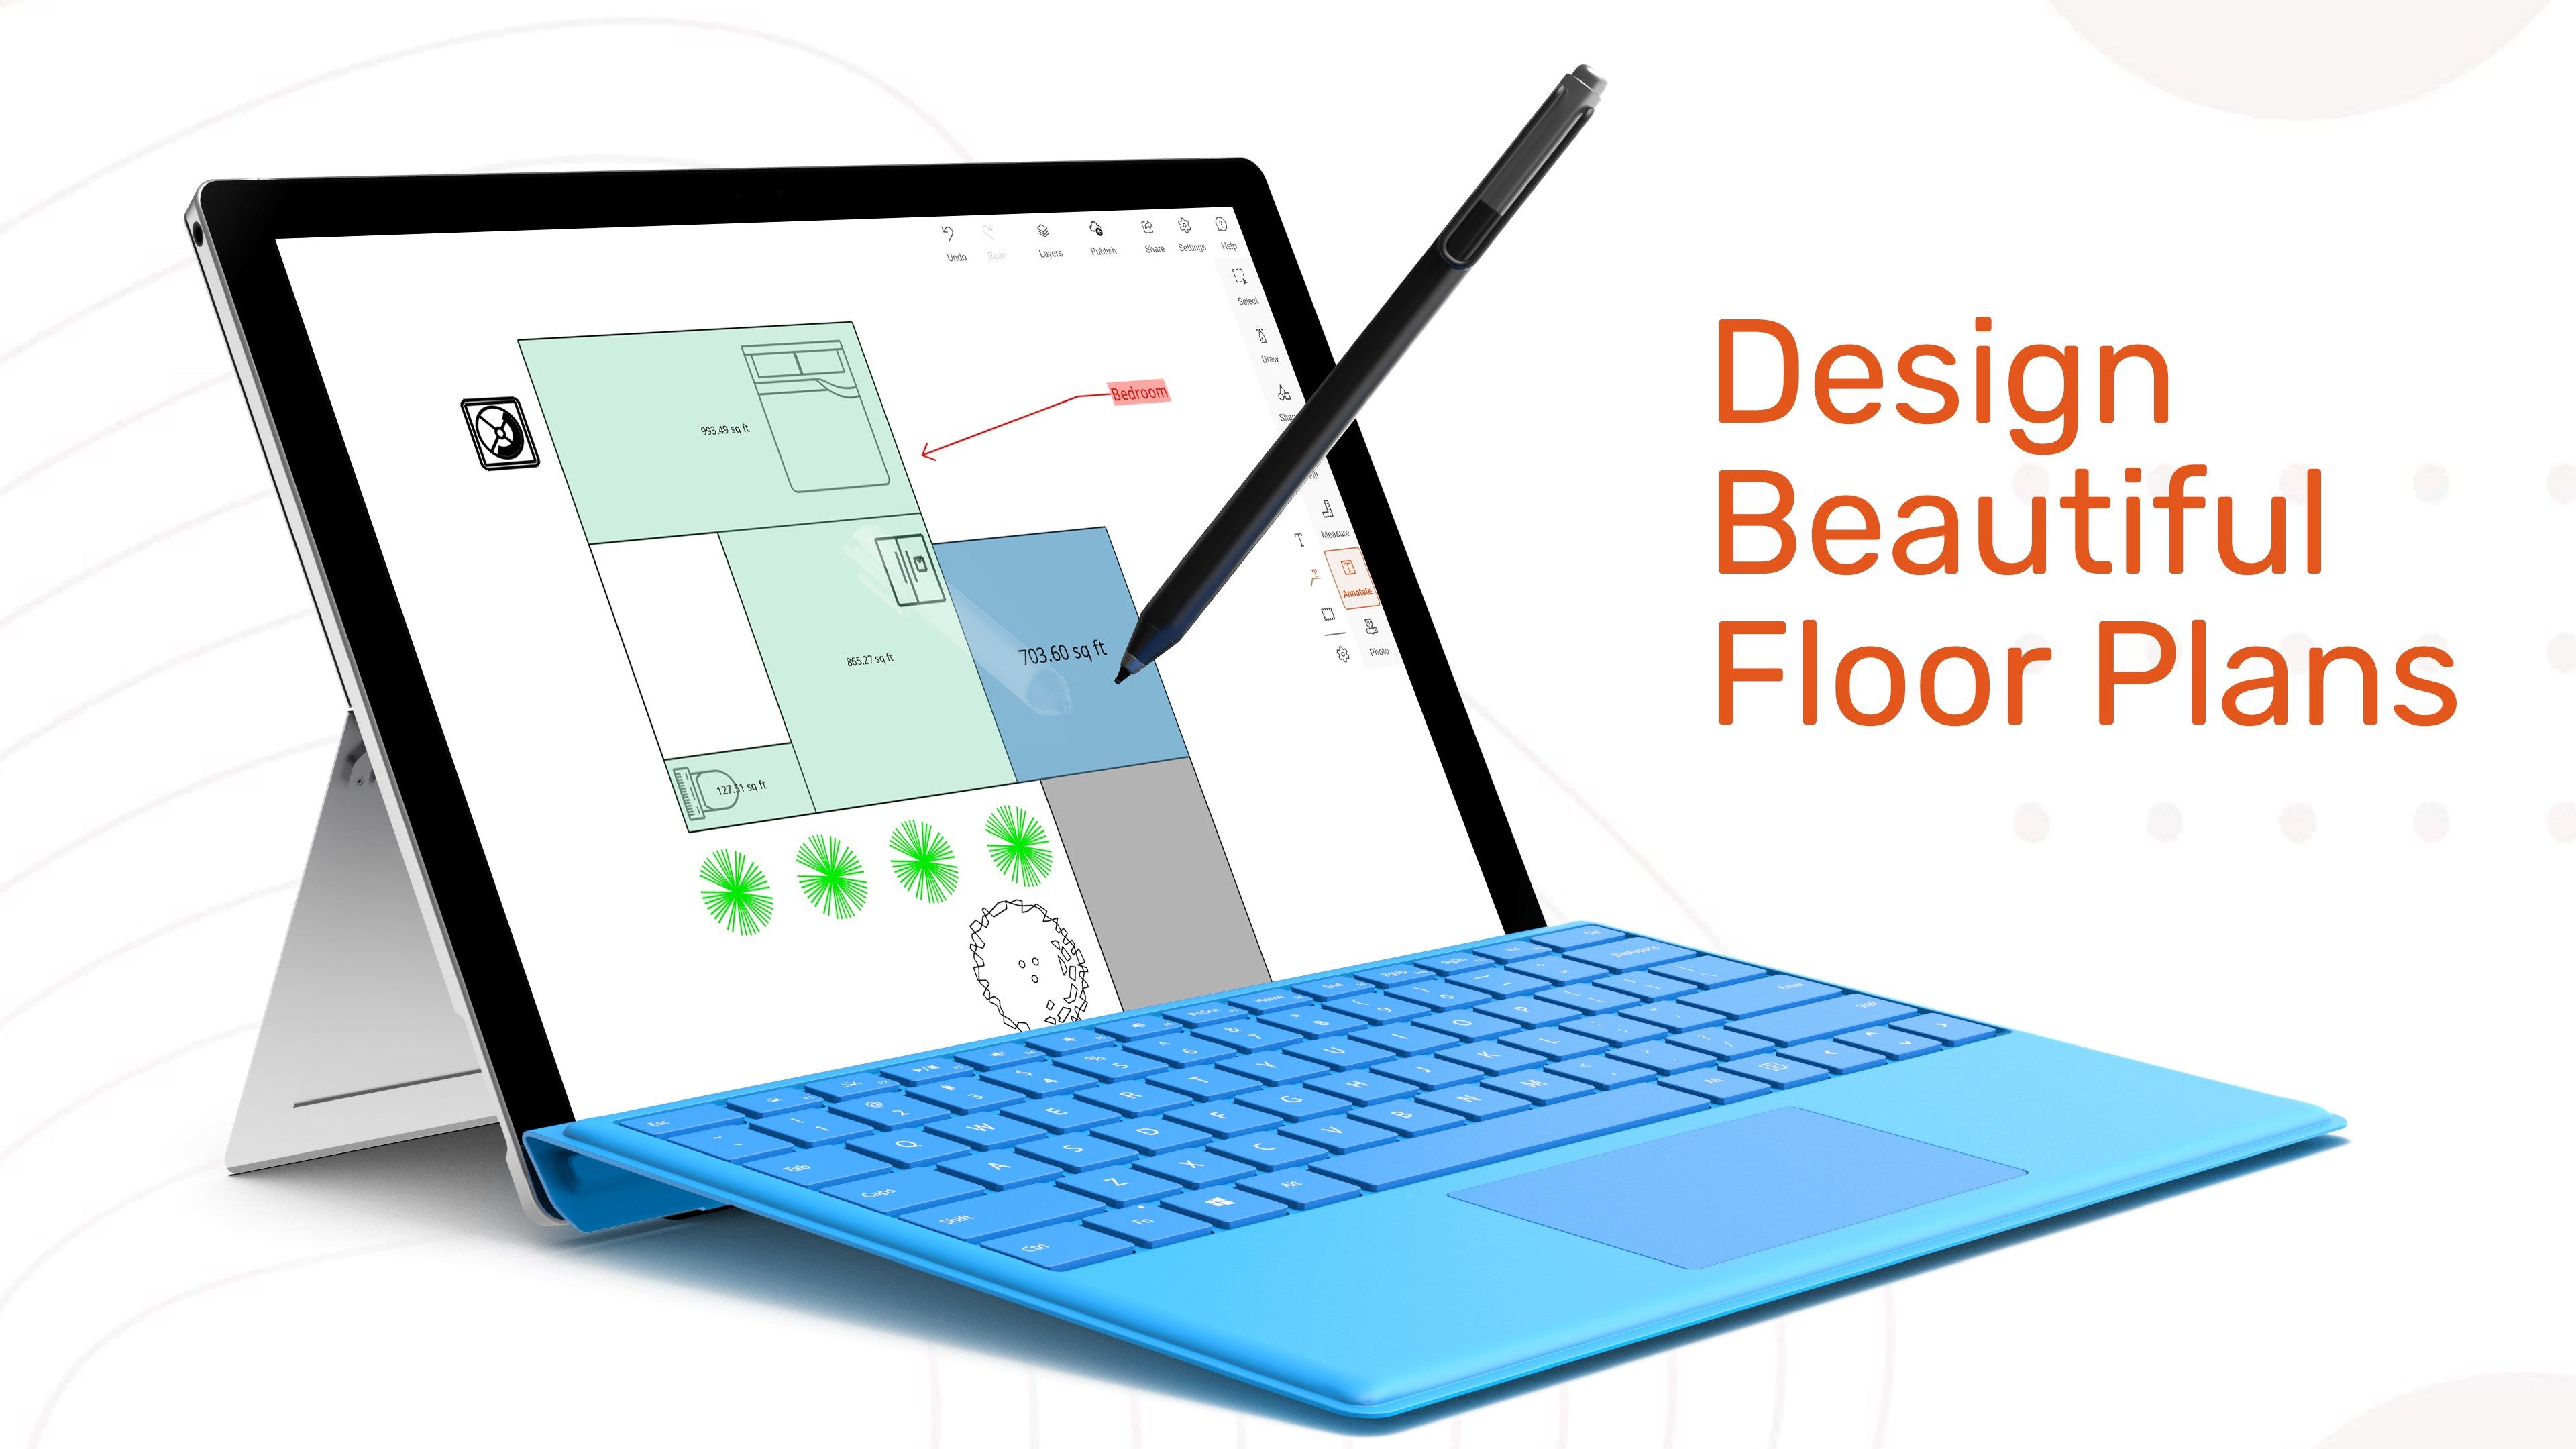 Design Beautiful Floor Plans and SIte Plans